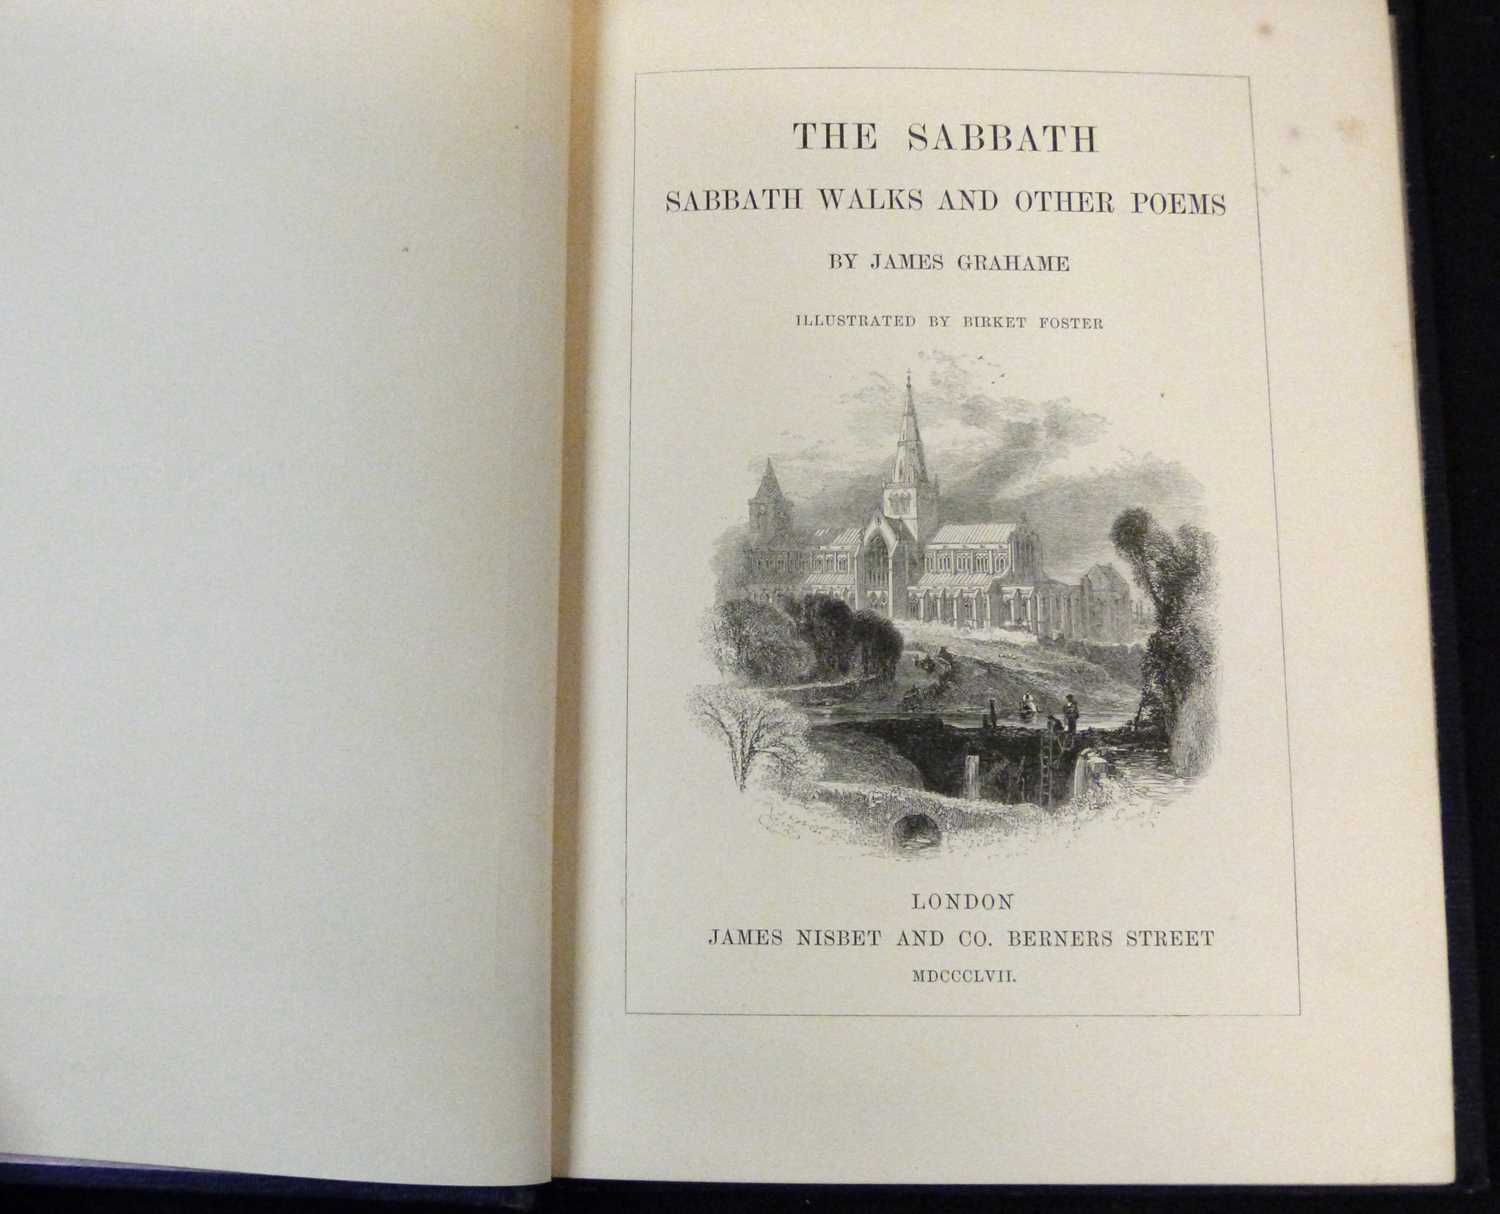 JAMES GRAHAME: THE SABBATH, SABBATH WALKS AND OTHER POEMS, ill Birket Foster, London, James